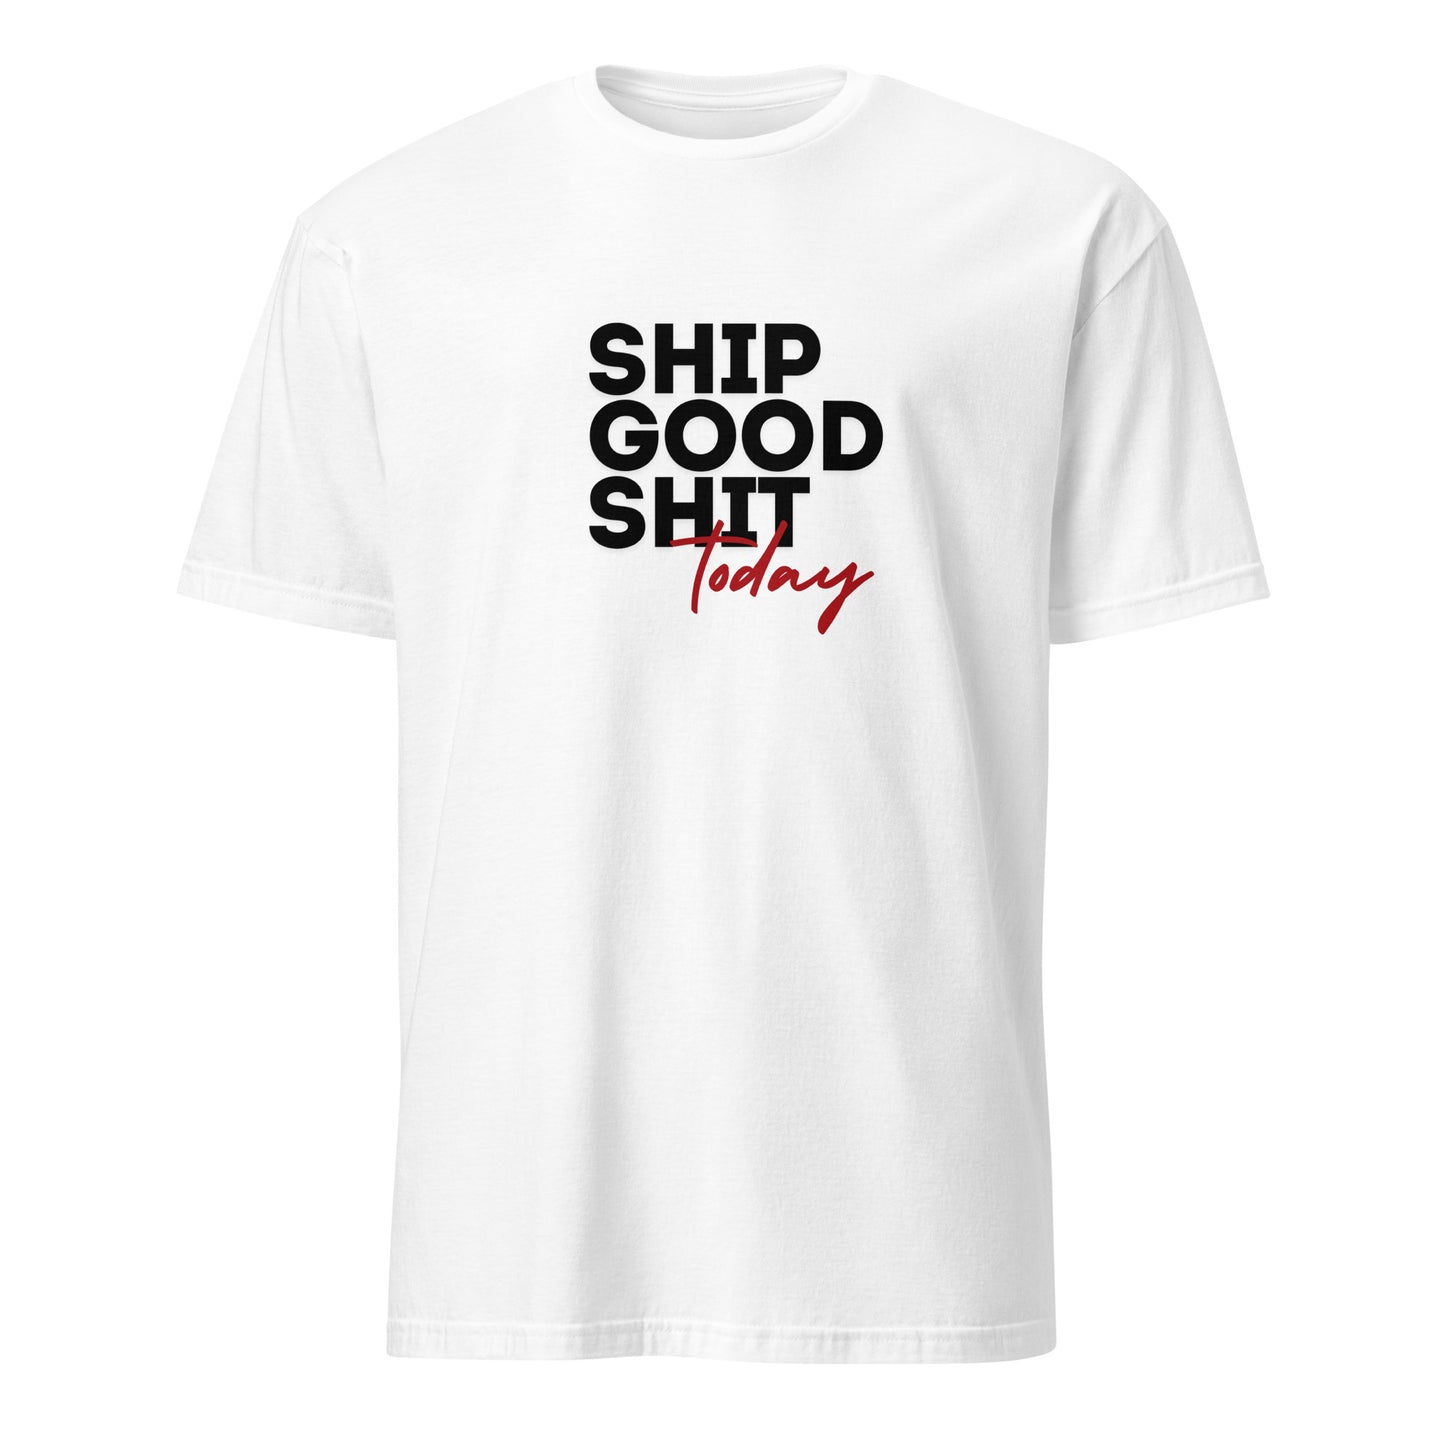 Ship Good Shit Unisex Soft T-Shirt